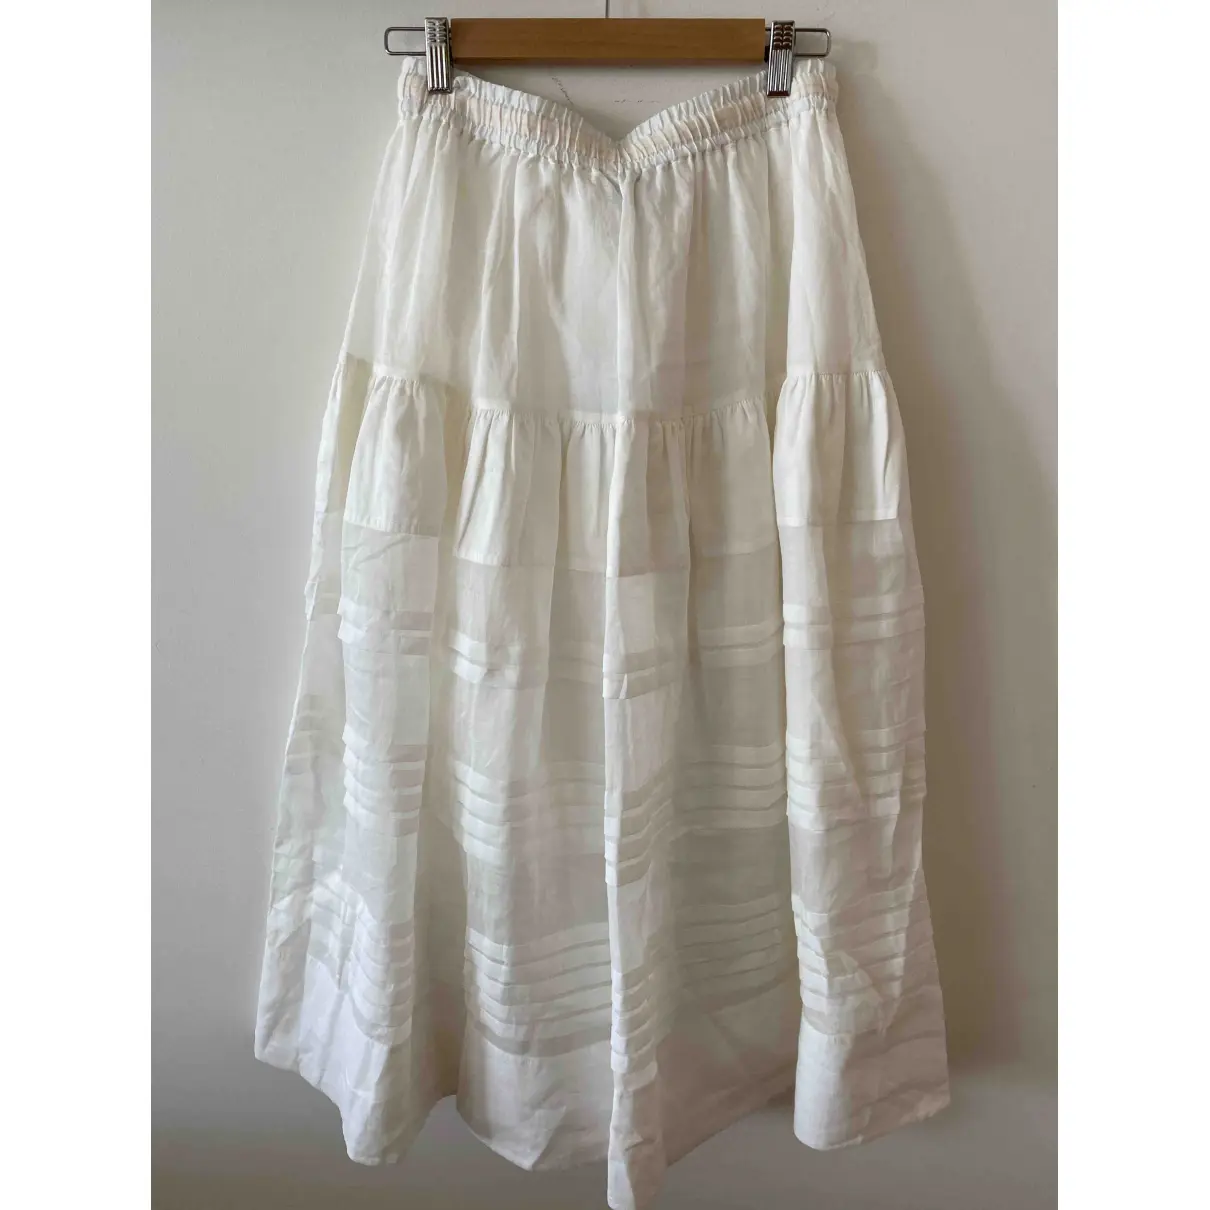 Buy Lee Mathews Mid-length skirt online